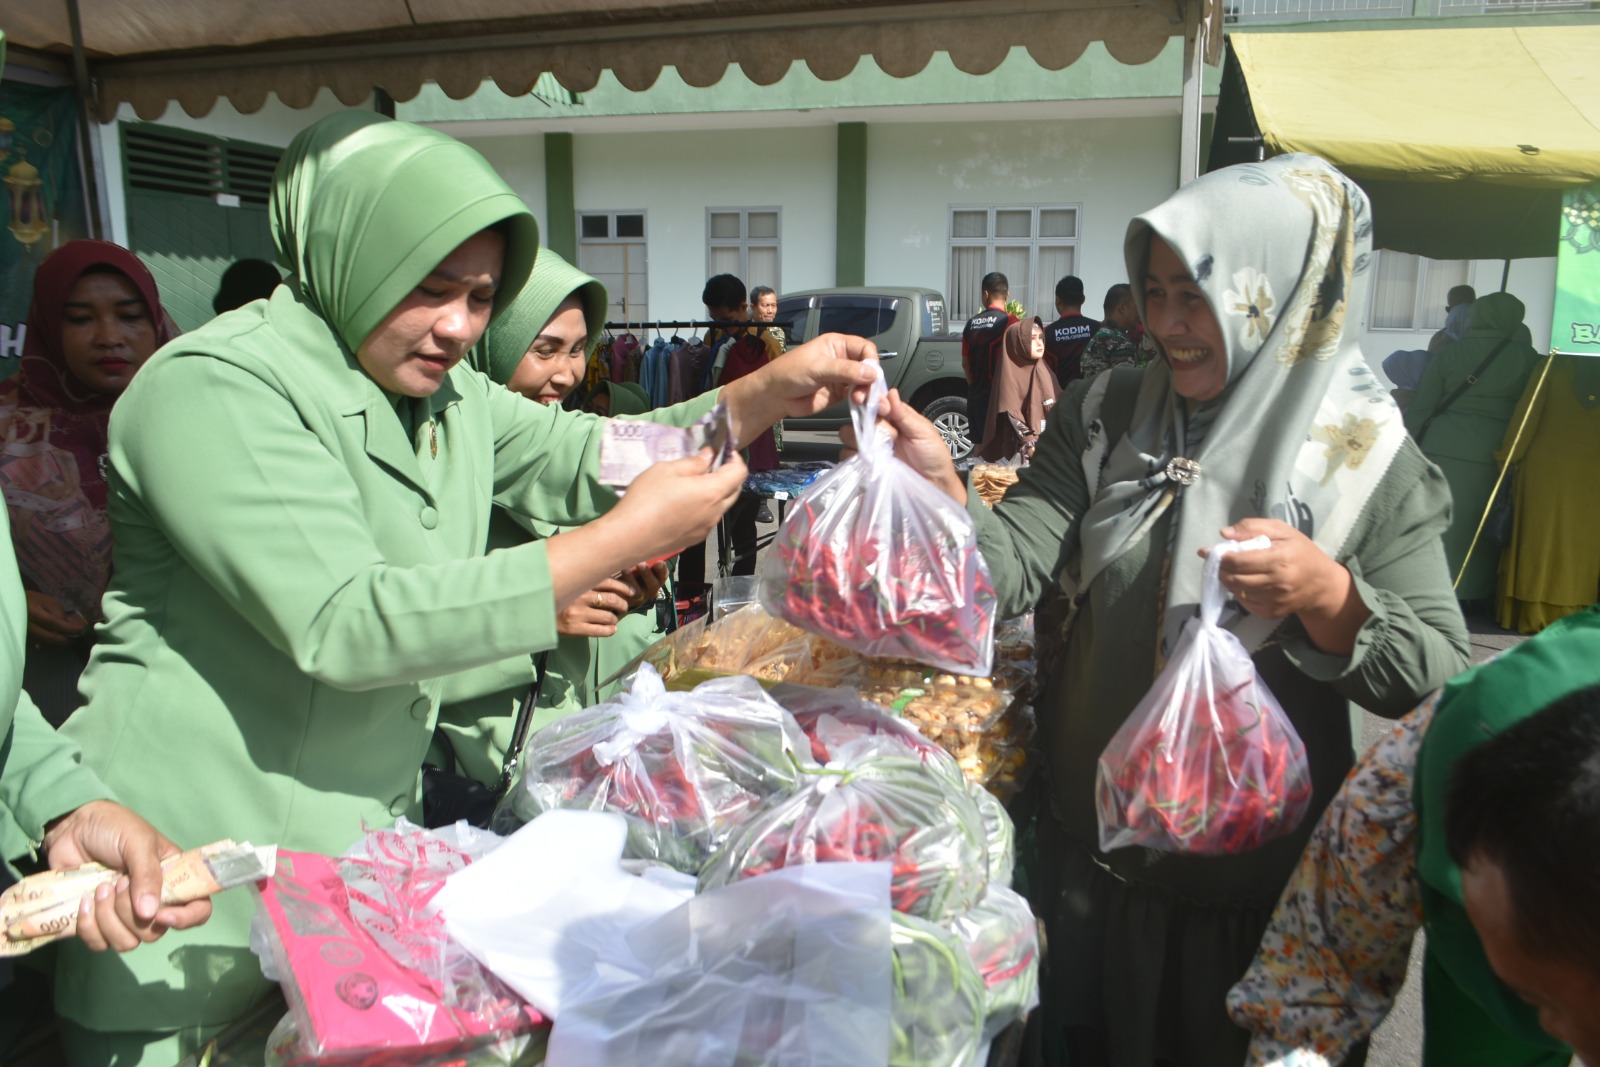 Jelang Lebaran, Korem 042/Gapu Gelar Bazar Murah yang Serentak diadakan Se-Indonesia